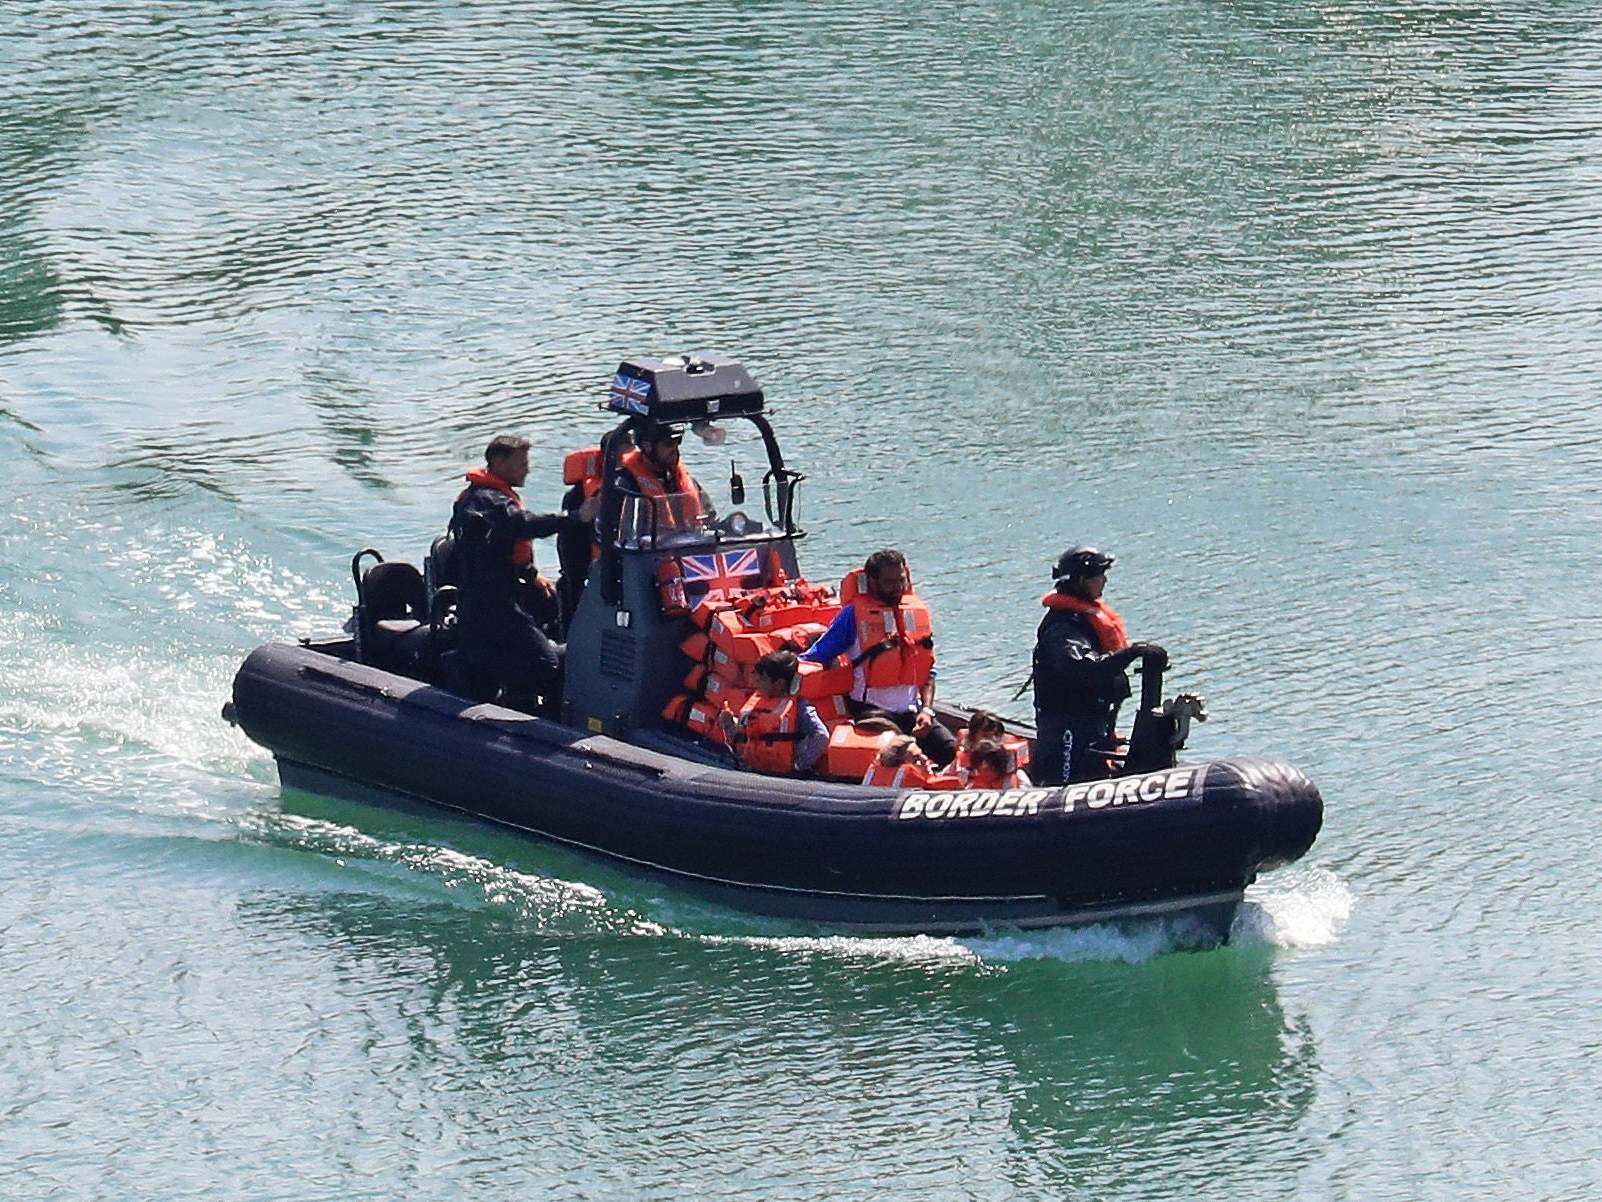 A Border Force boat arrives in Dover, Kent [file photo]